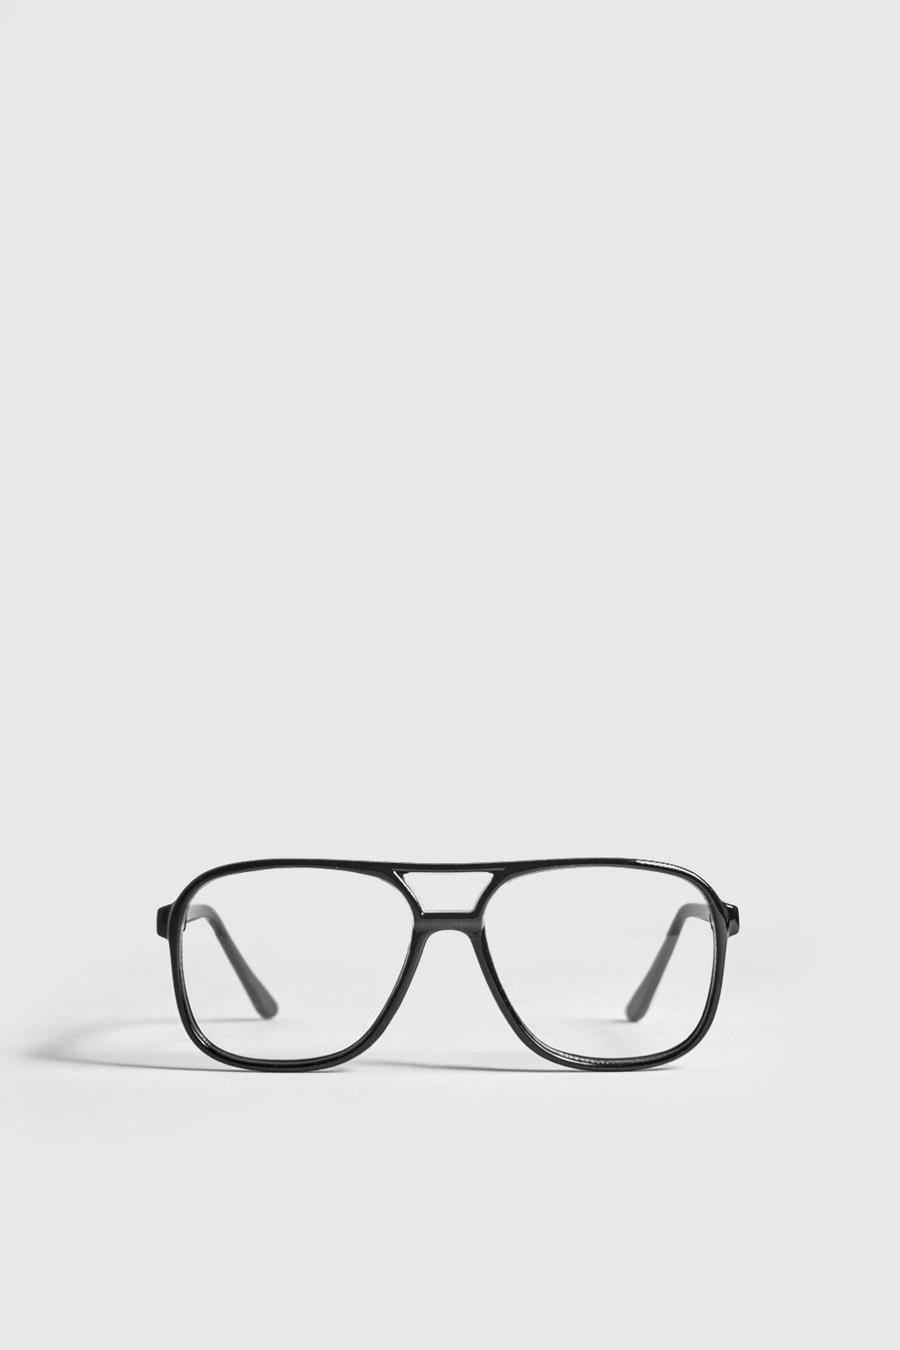 Black Clear Lens Geek Fashion Glasses